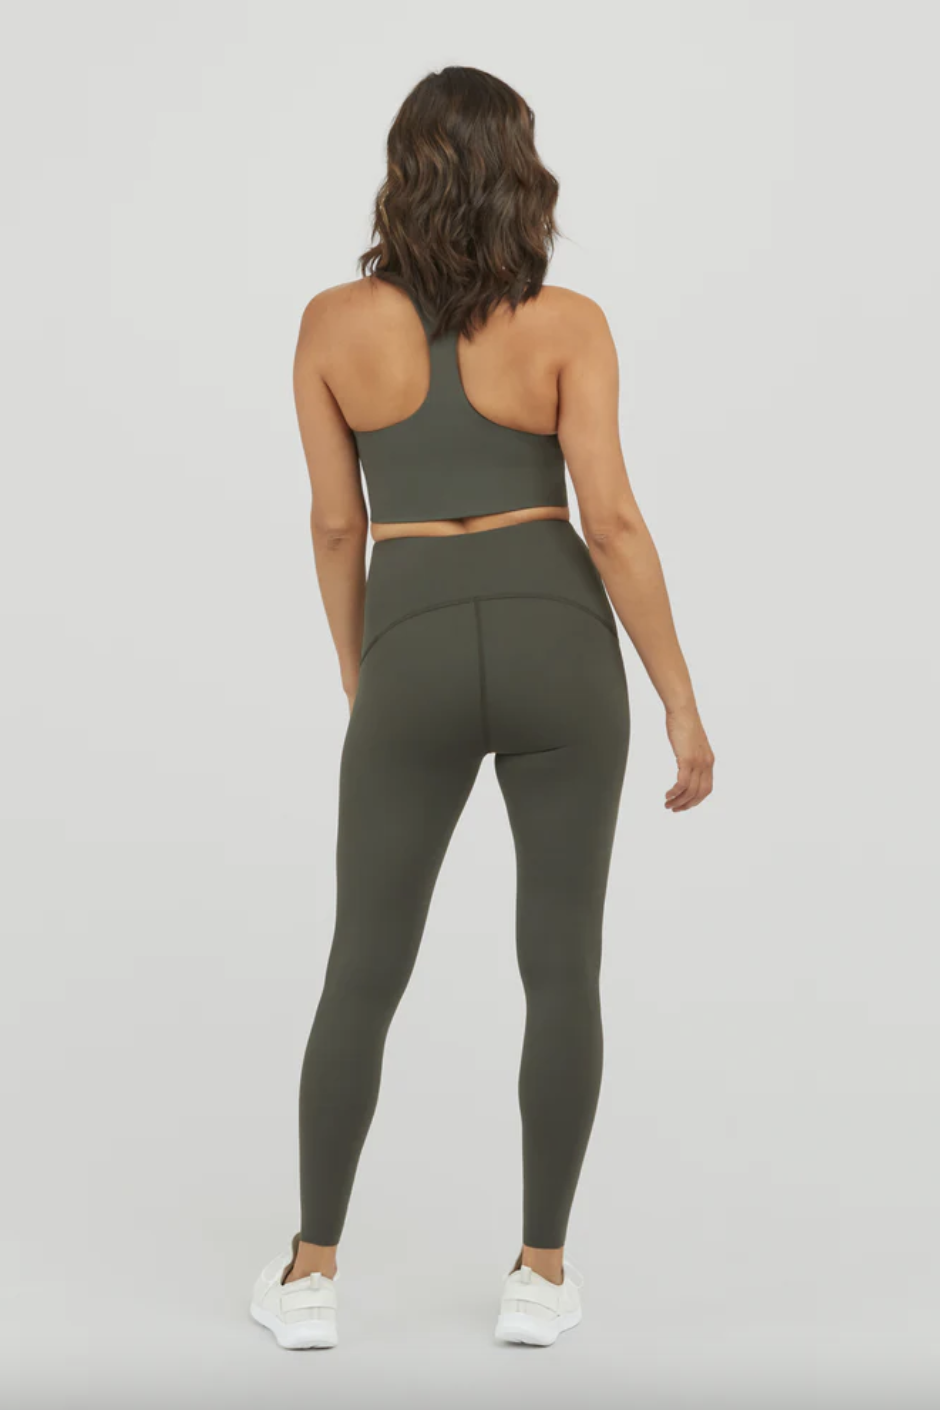 SEASUM Women's High Waist Yoga Pants Tummy Control Slimming Booty Leggings  Workout Running Butt Lift Tights, B-capris 